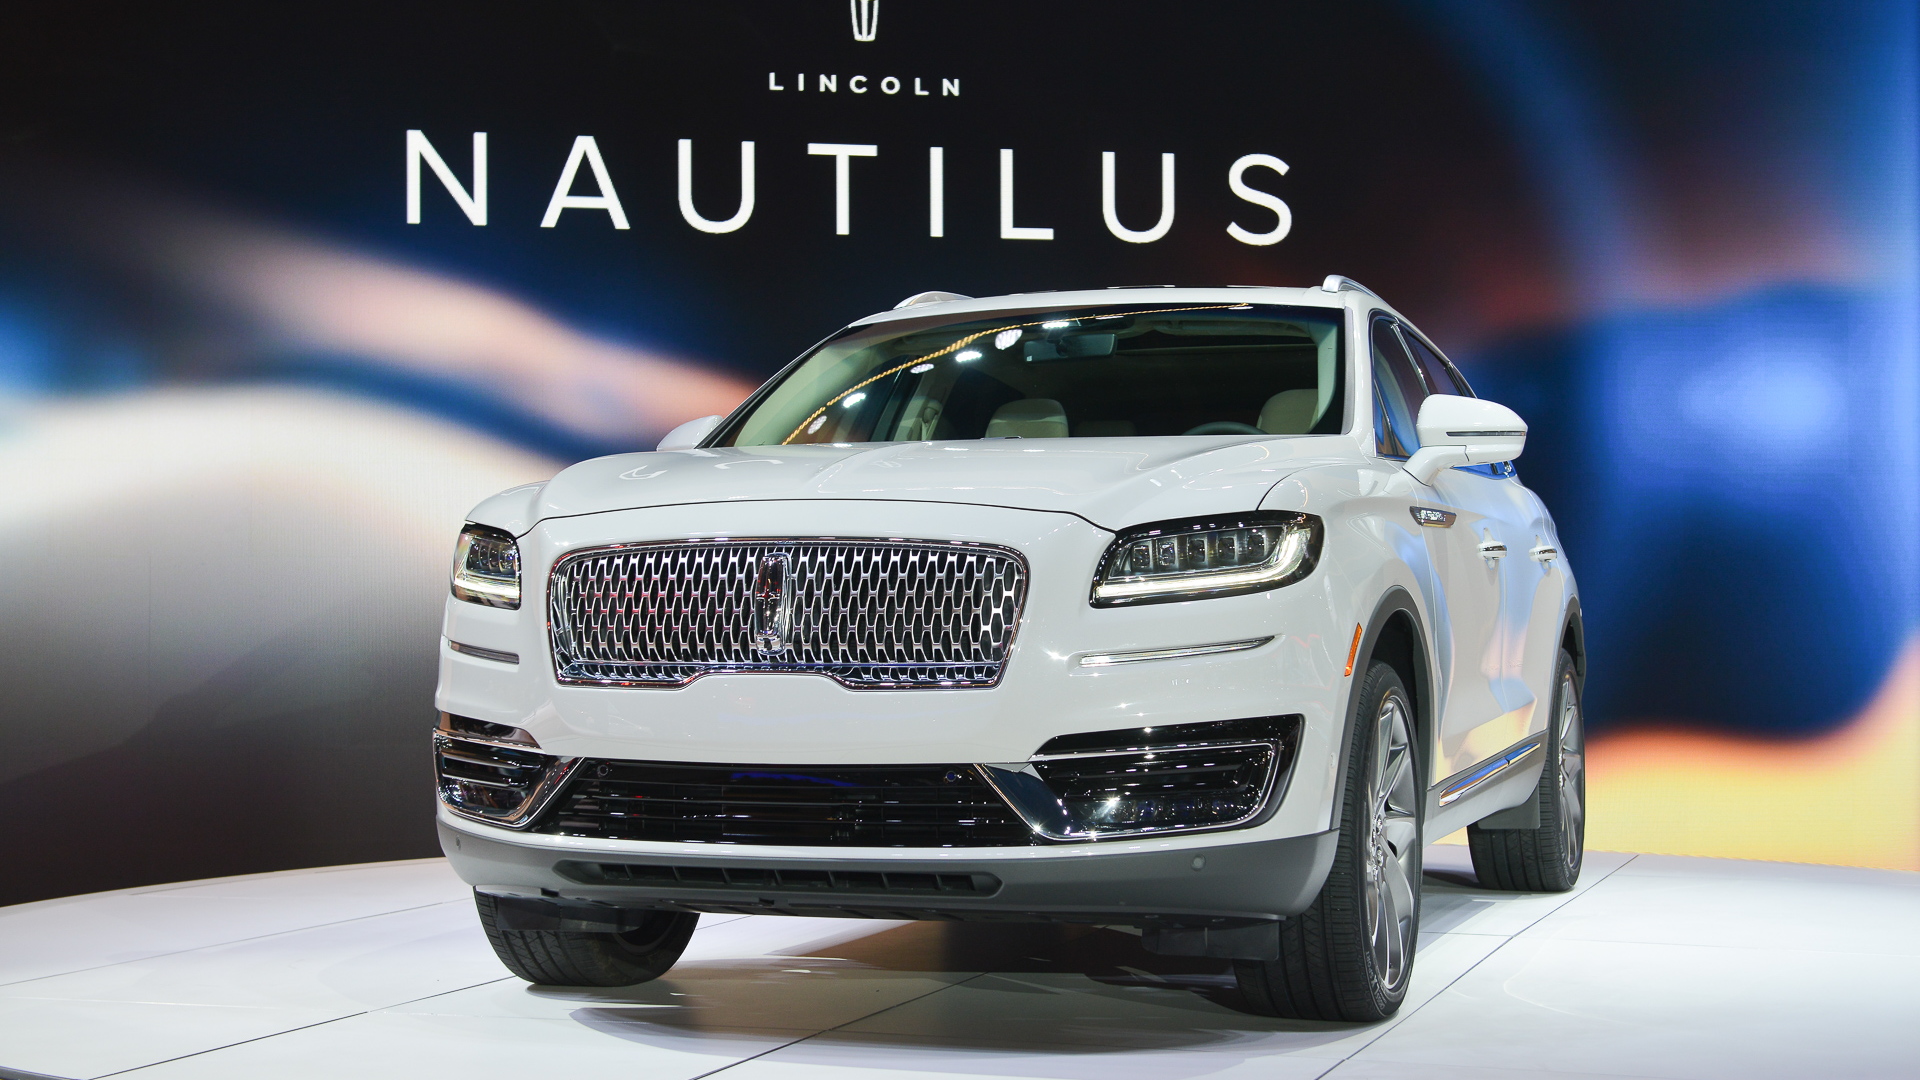 2019 Lincoln Nautilus, 2017 Los Angeles Auto Show